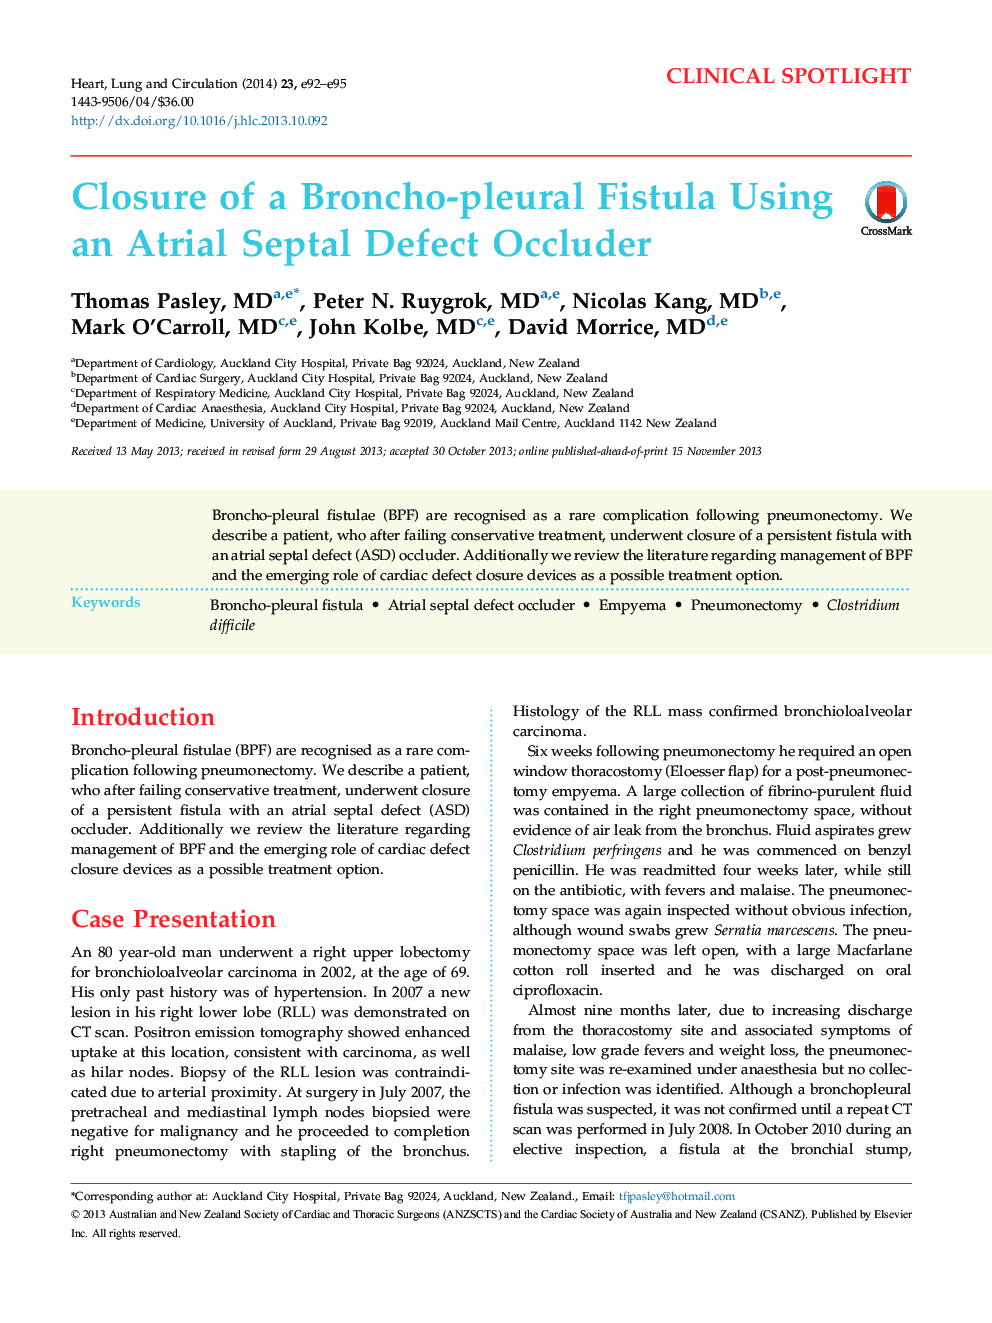 Closure of a Broncho-pleural Fistula Using an Atrial Septal Defect Occluder